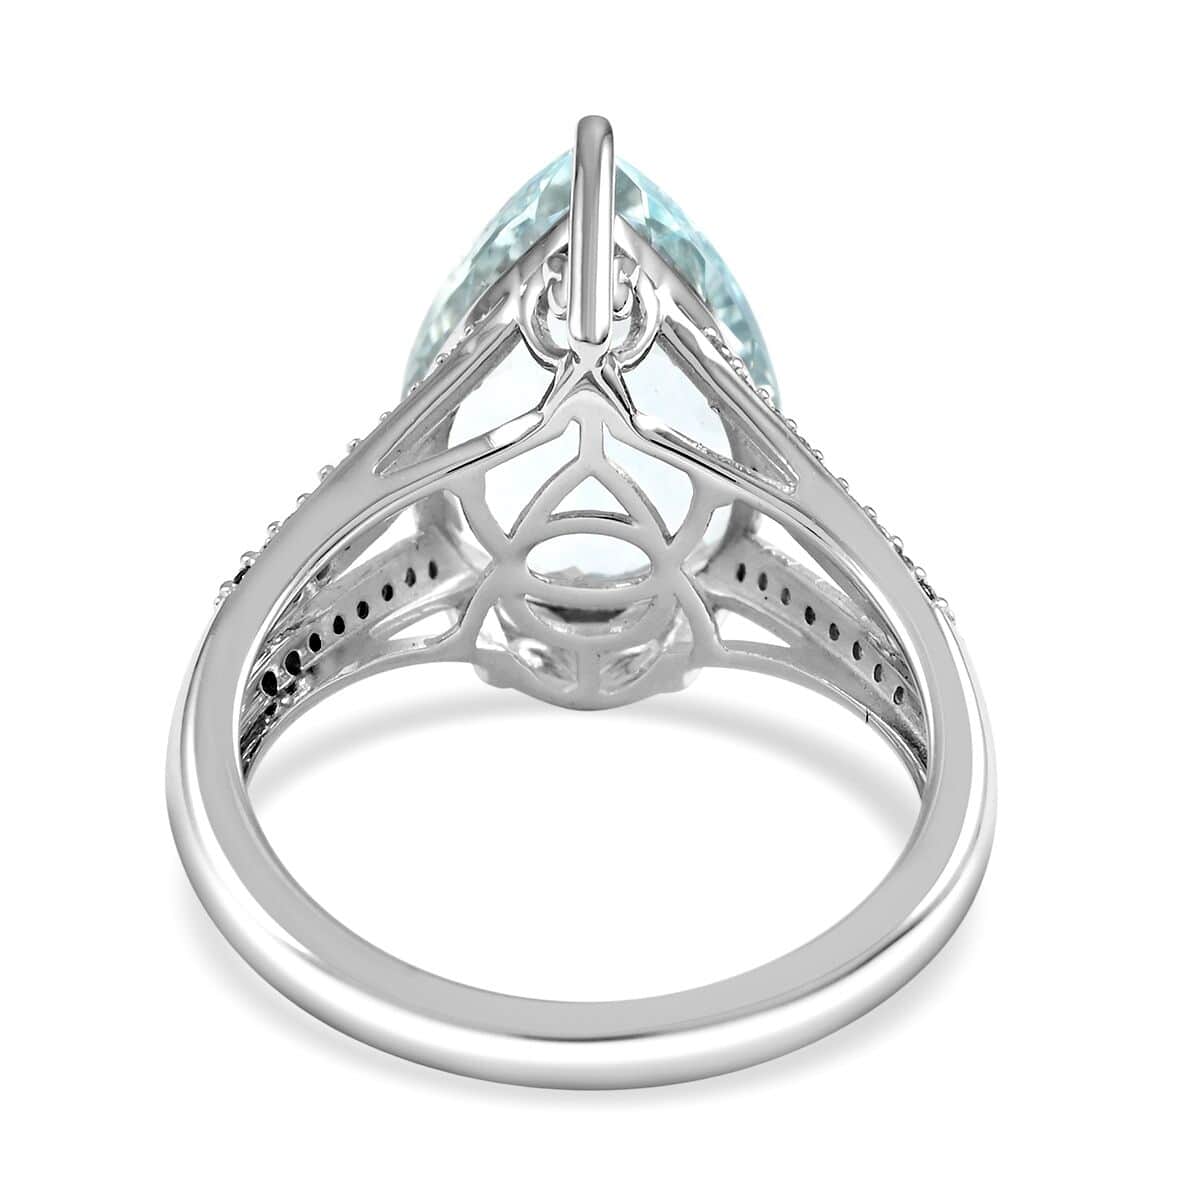 Luxoro 14K White Gold Premium Mangoro Aquamarine and G-H I2 Diamond Ring (Size 10.0) 4.50 ctw image number 4